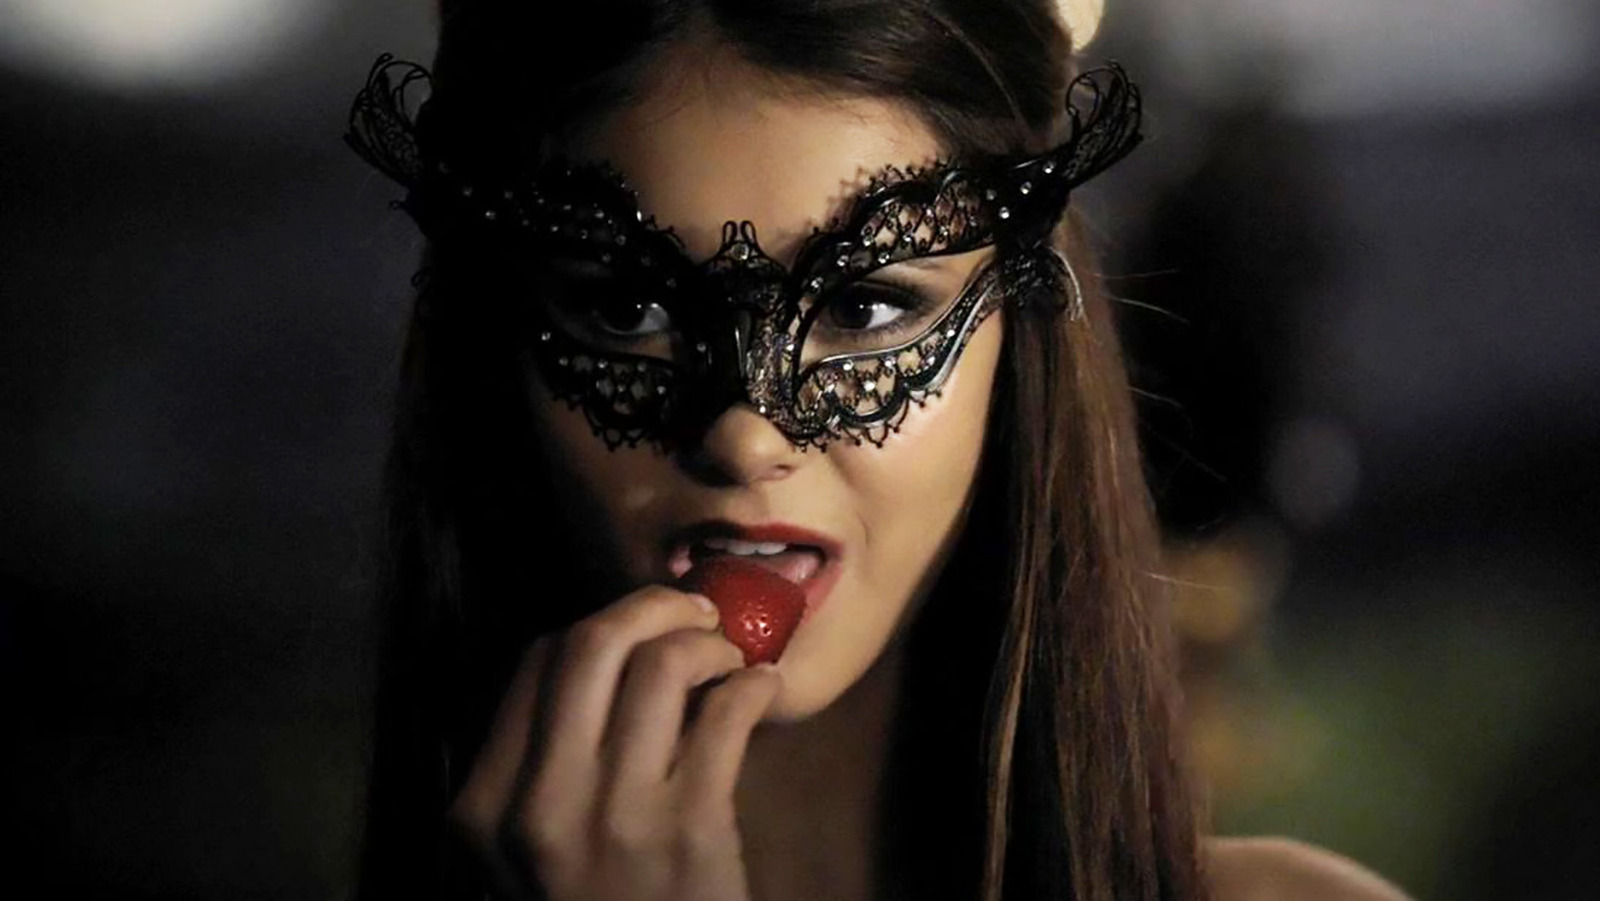 The Masquerade: Caroline Forbes  Caroline forbes, The vampire diaries 3,  Vampier diaries